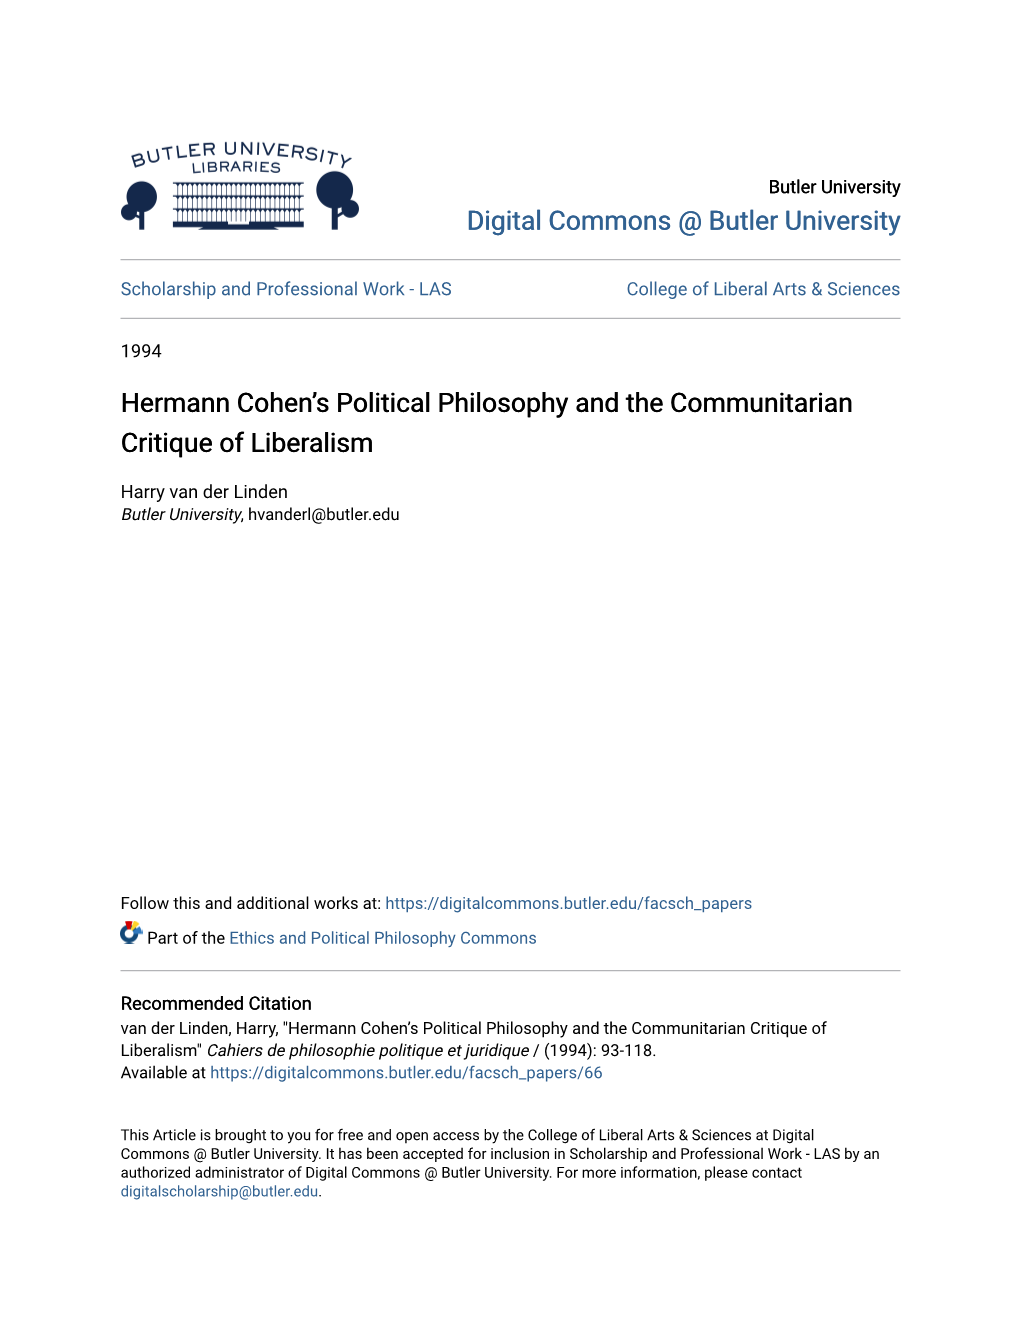 Hermann Cohen's Political Philosophy and the Communitarian Critique Of